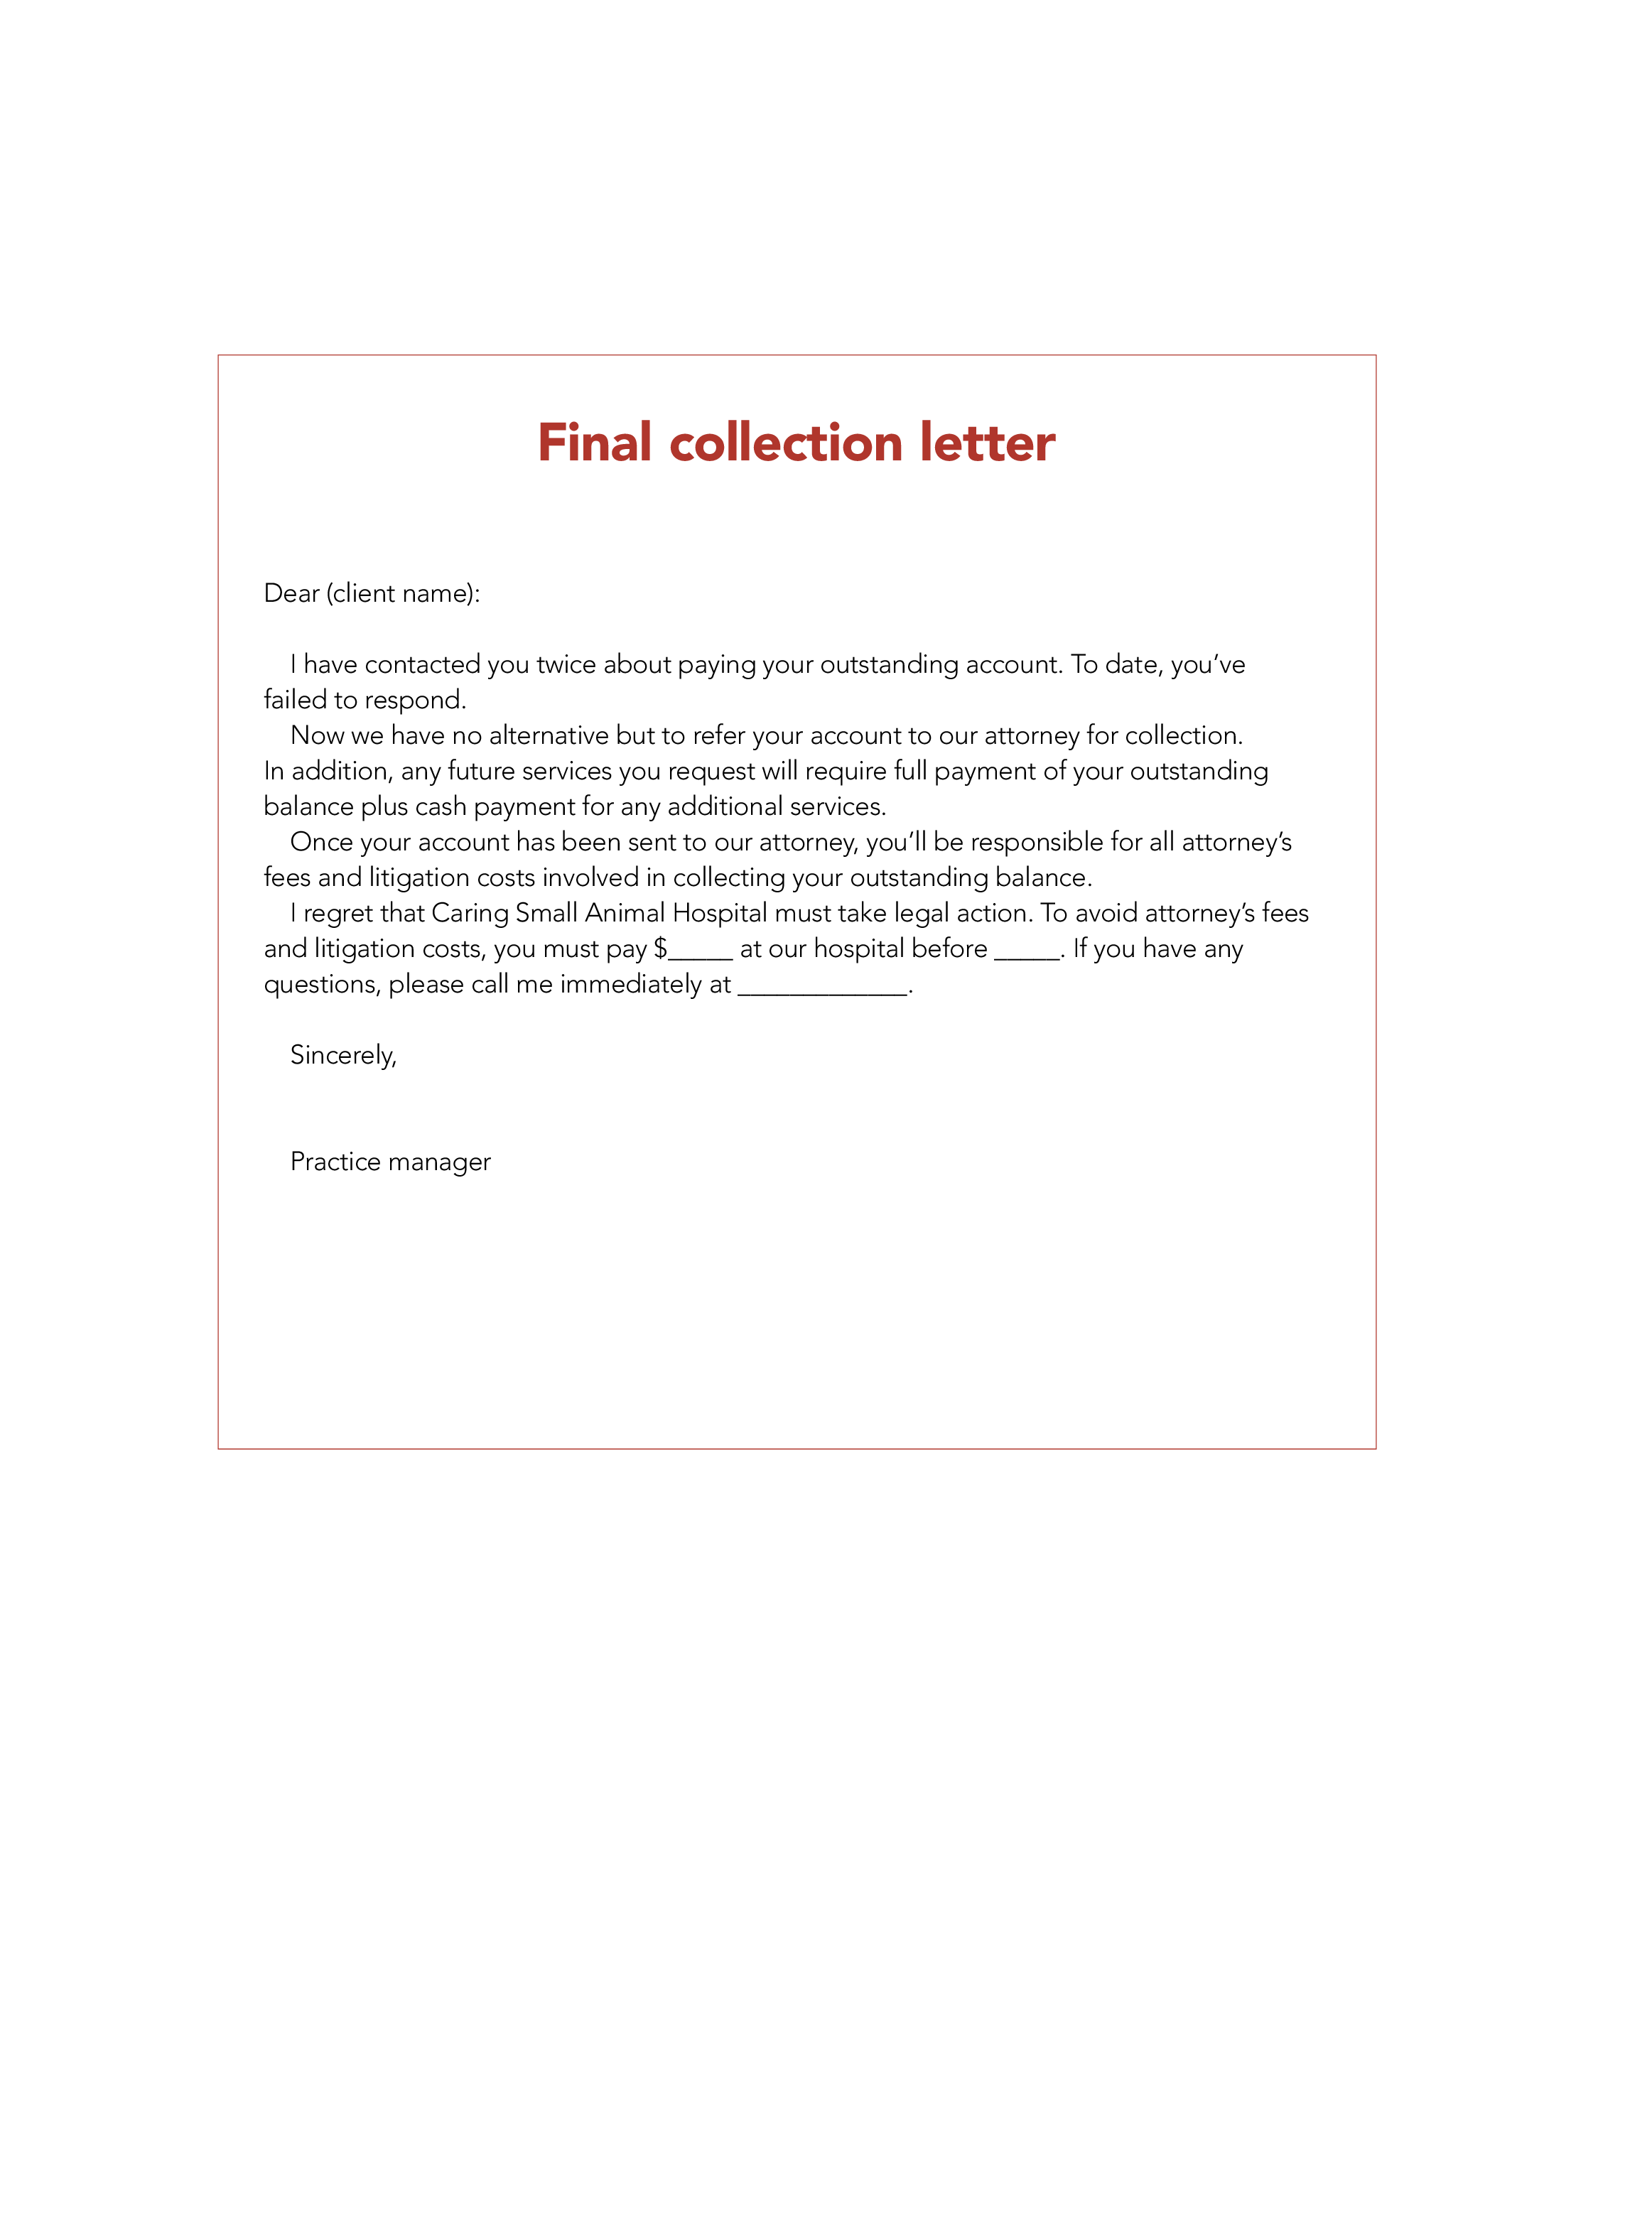 final collection letter plantilla imagen principal